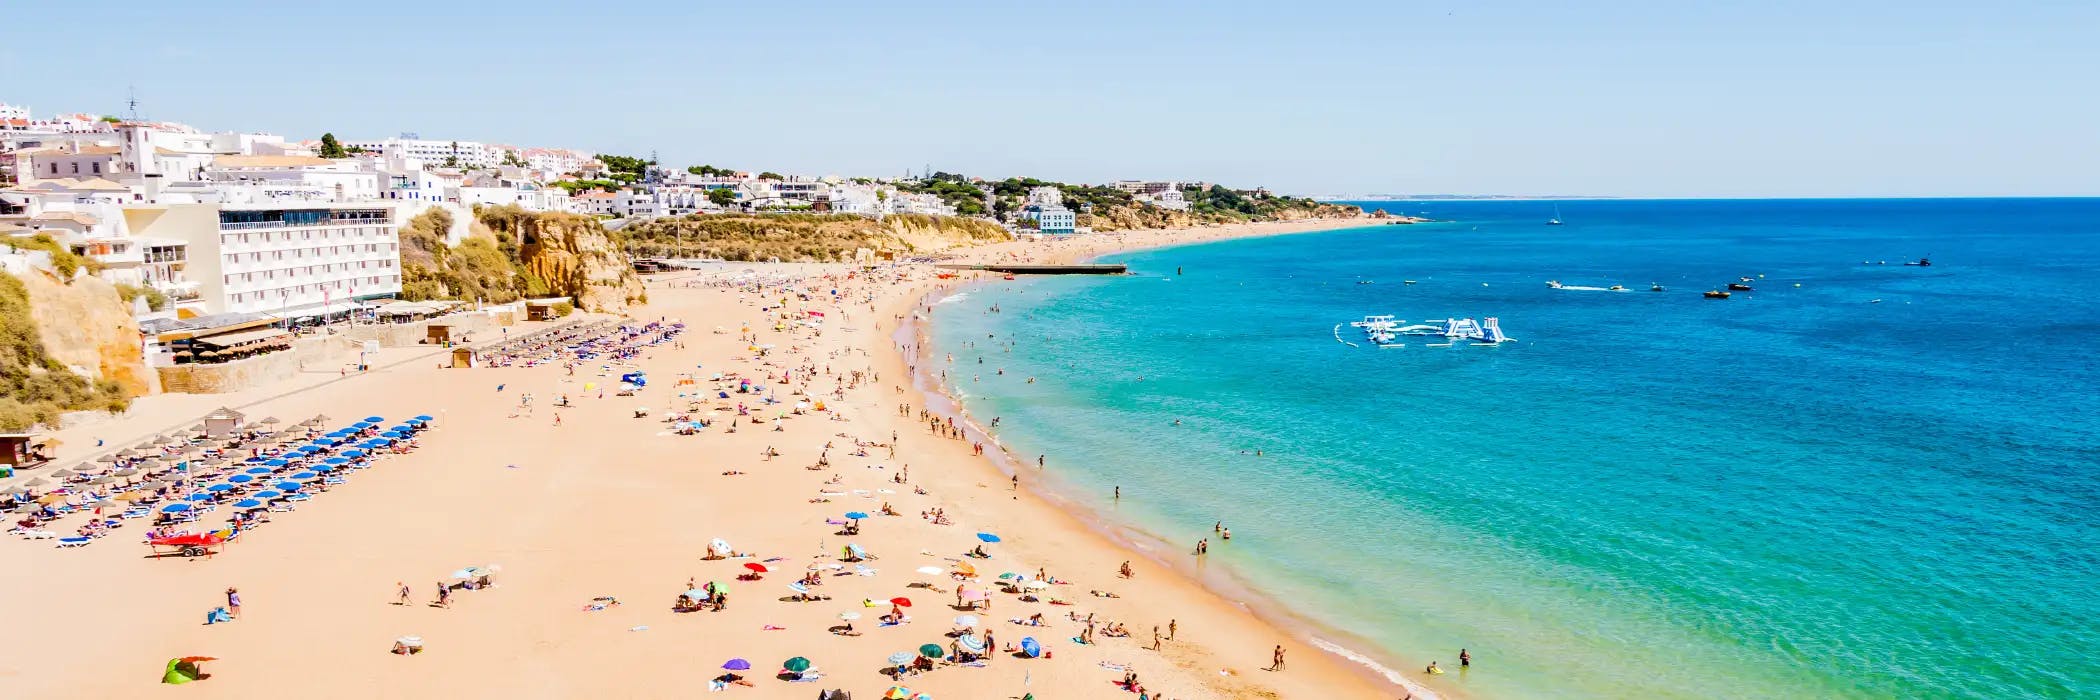 Algarve - Holidays Under £200